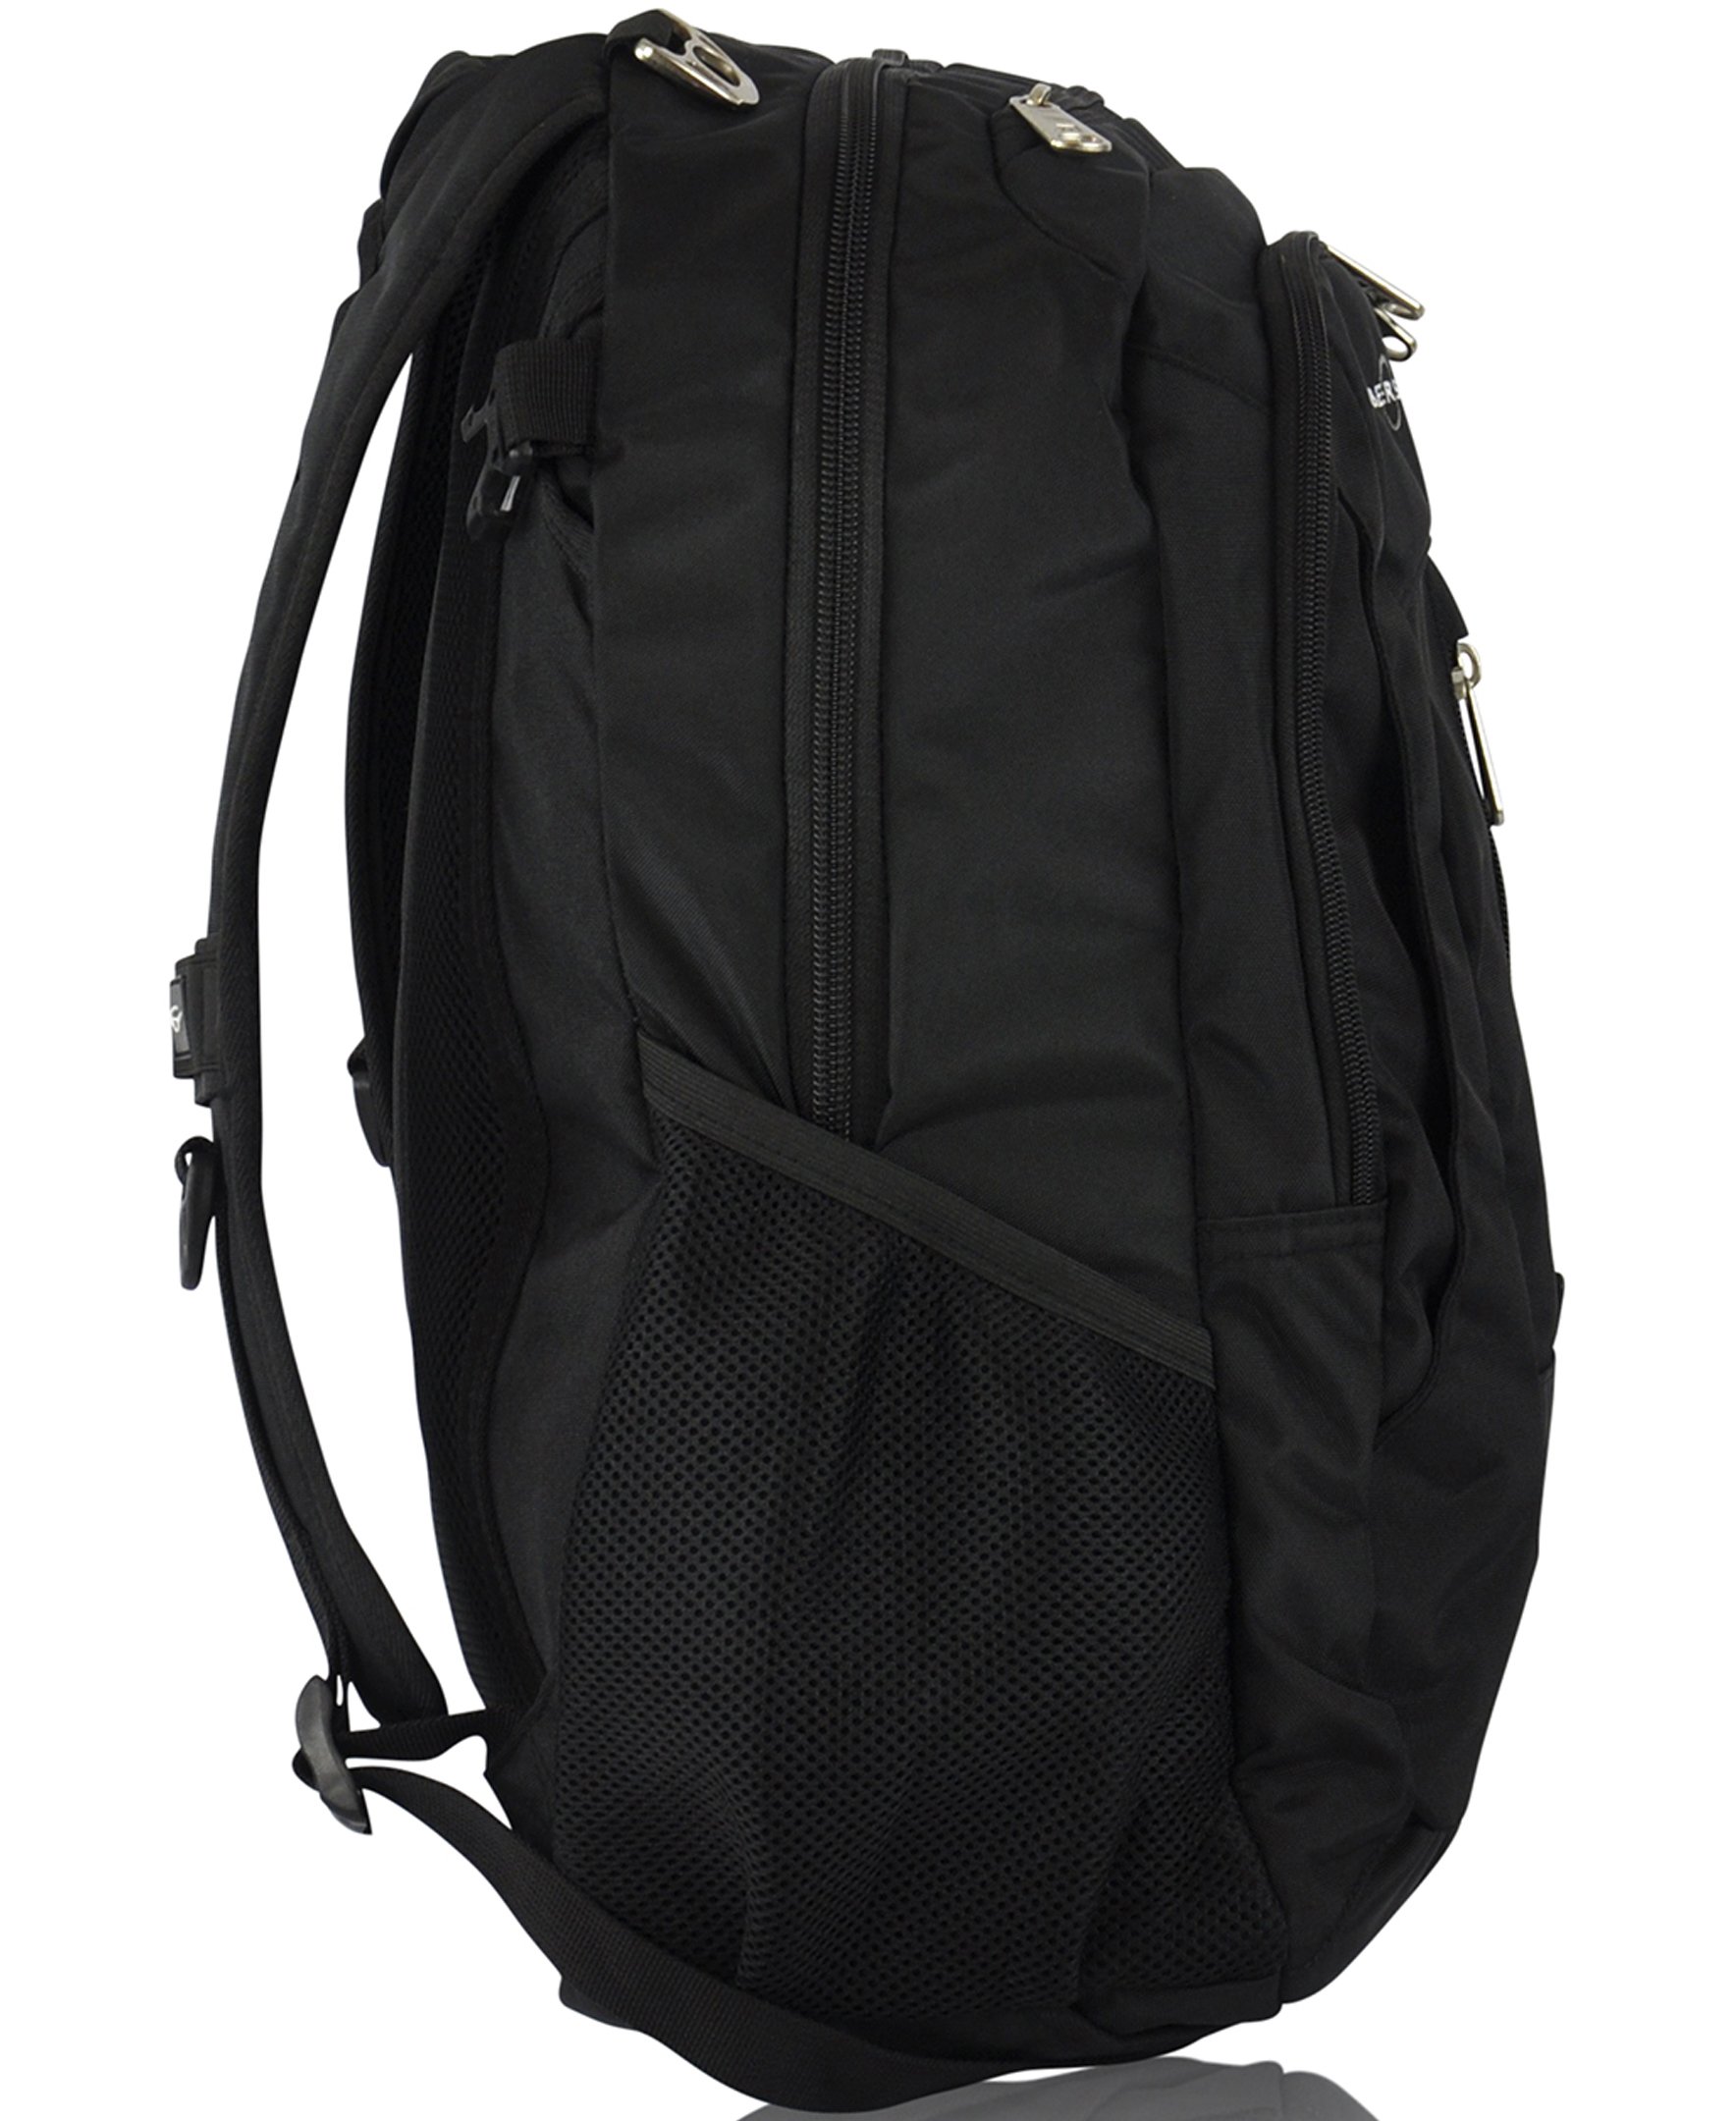 Obersee Bern Diaper Bag Backpack and Cooler, Black/Sand - image 2 of 10